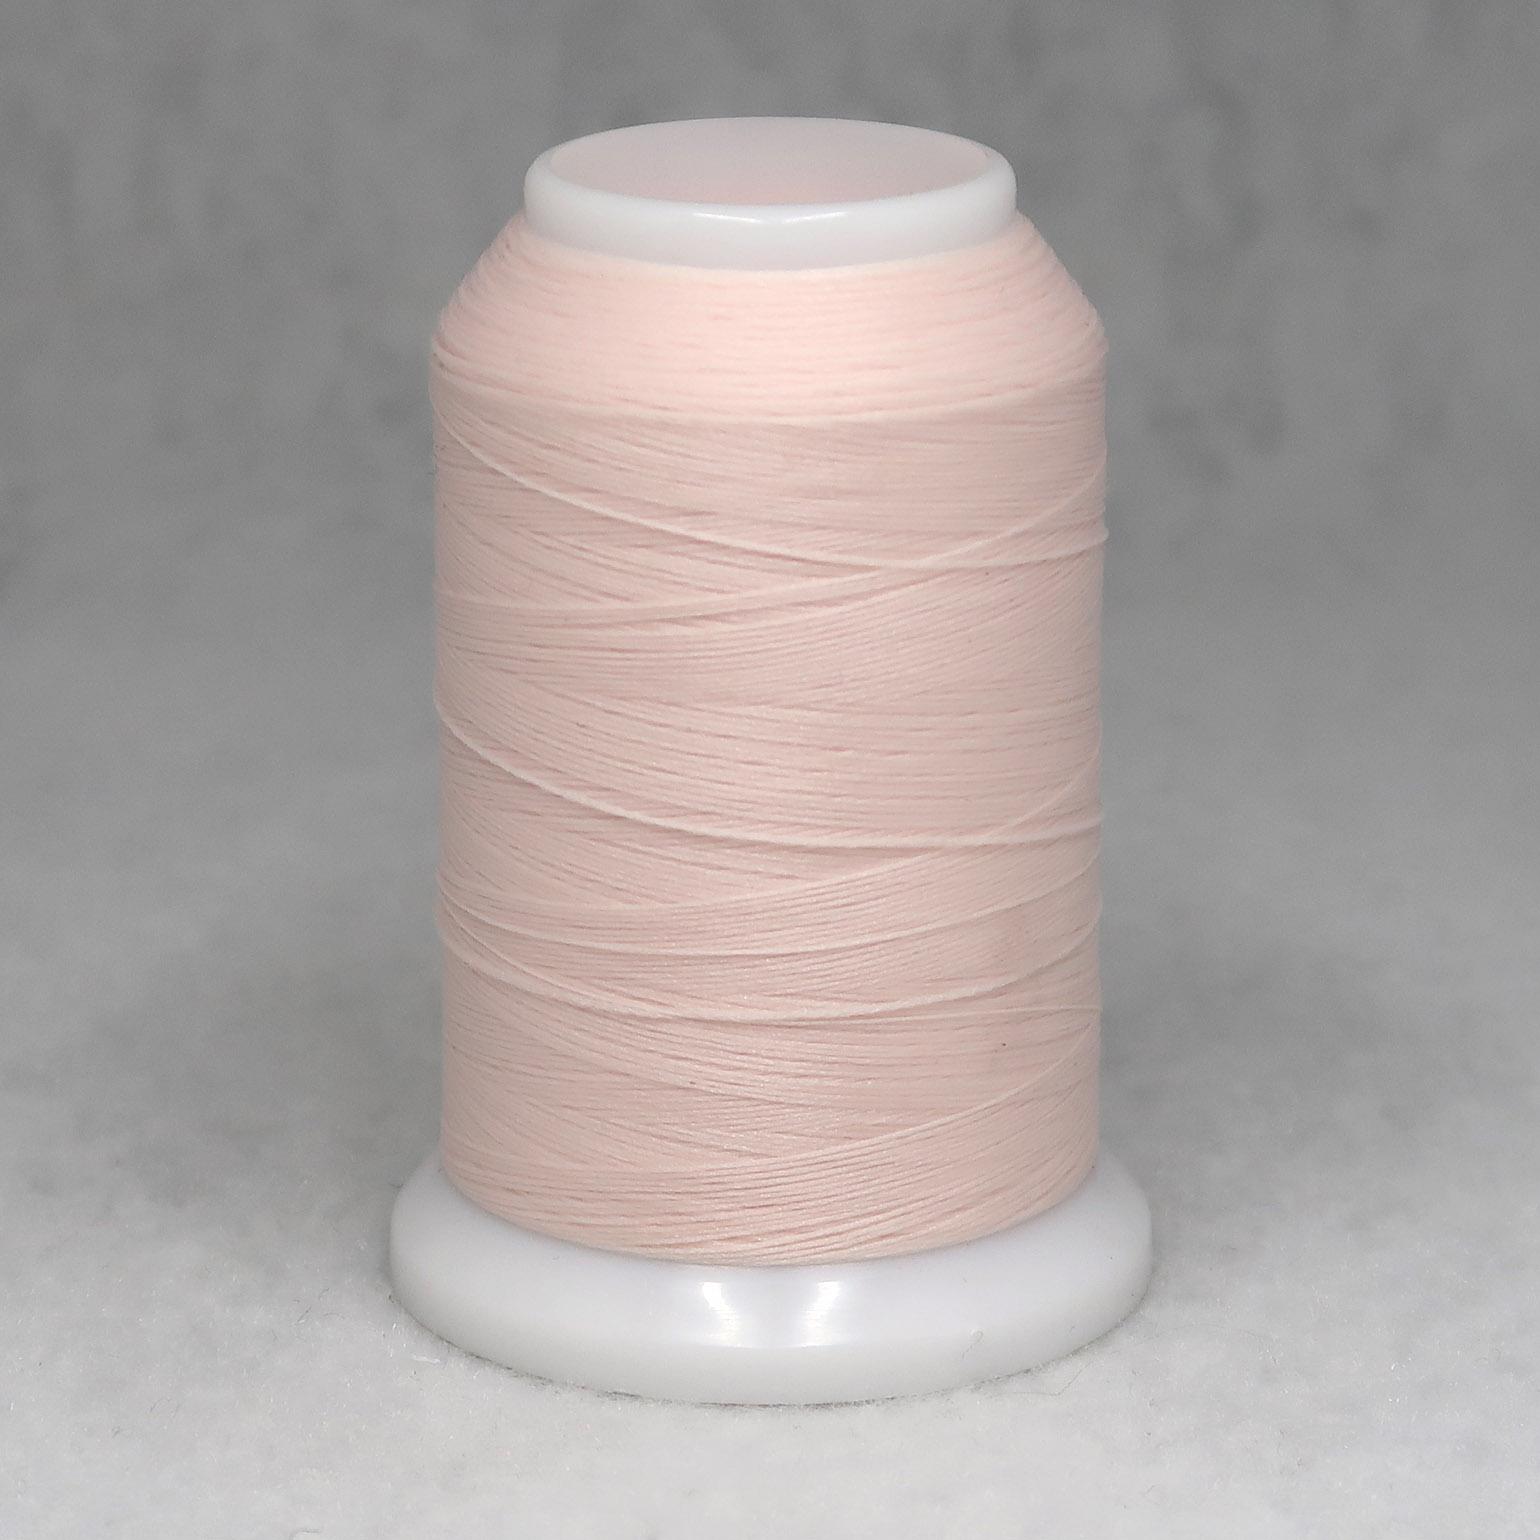 Woolly Nylon – Pale Pink